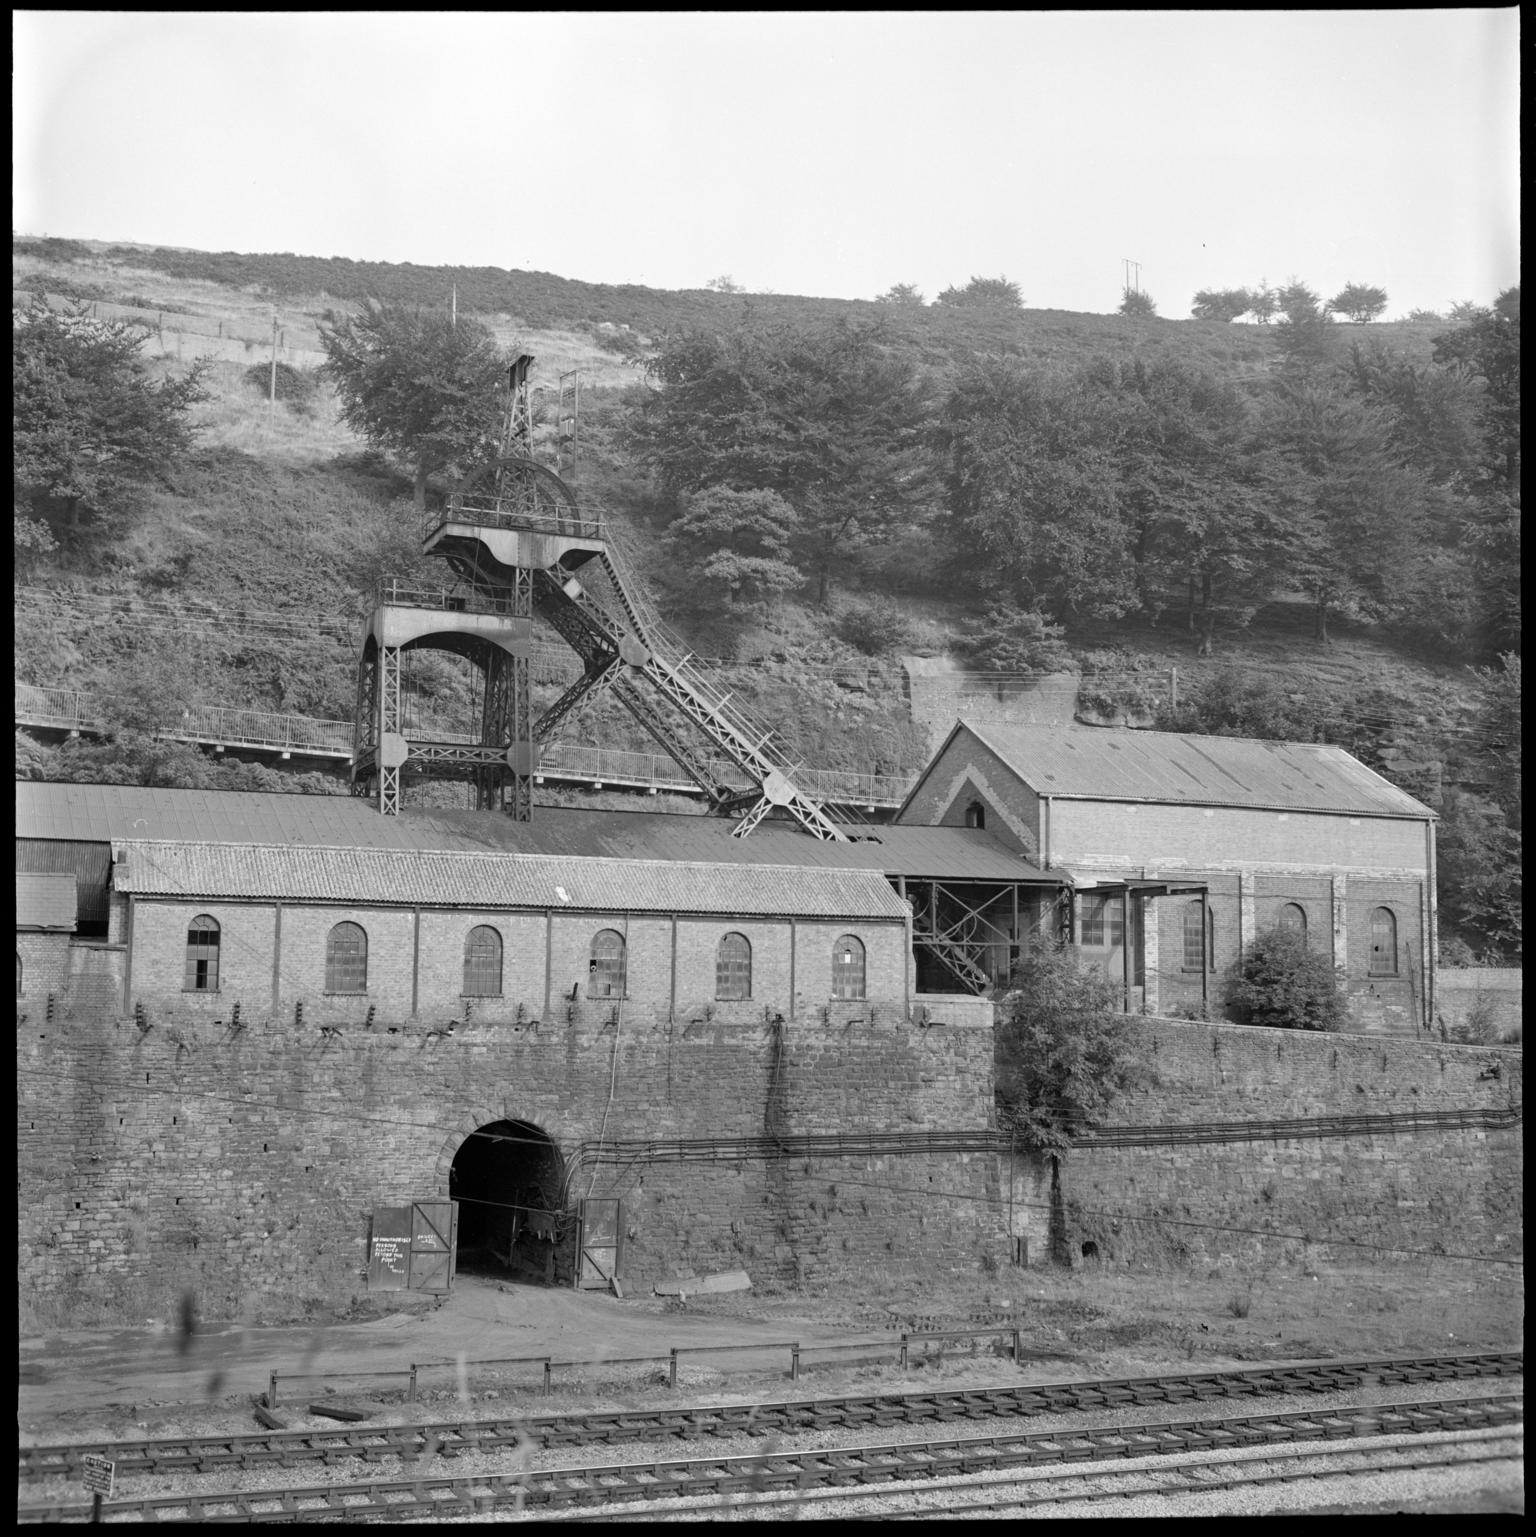 Llanhilleth Colliery, film negative